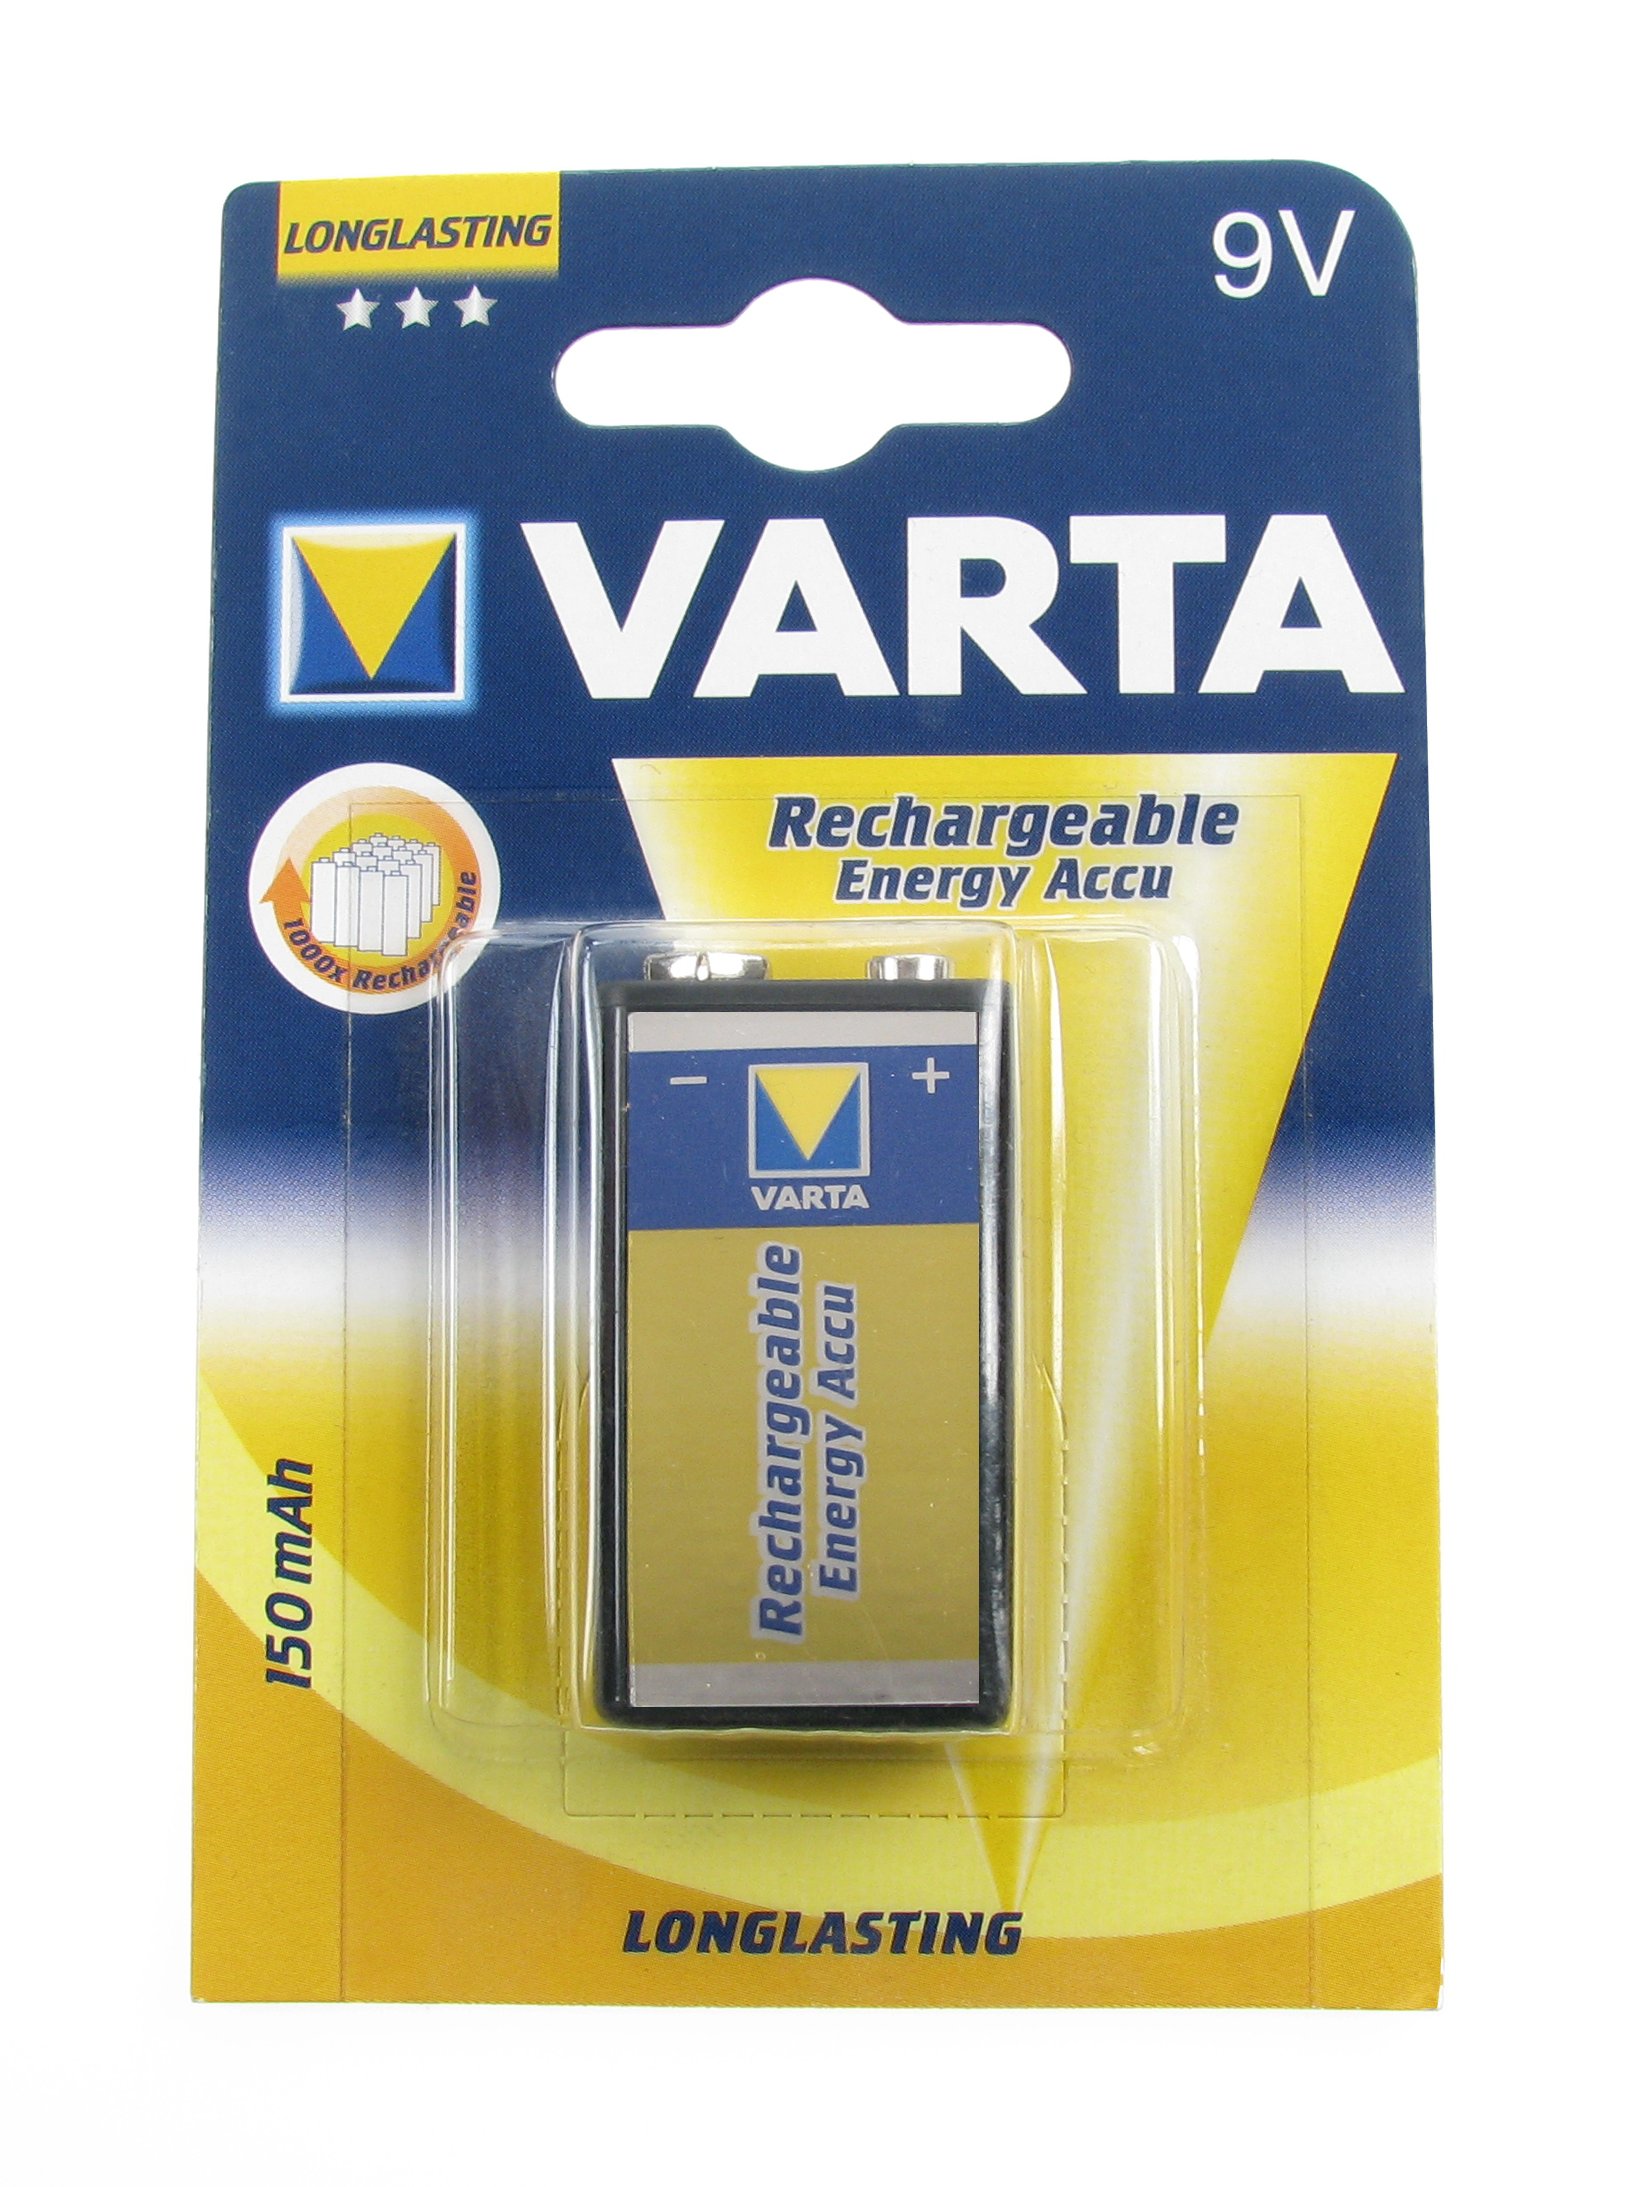 Varta 56622 rechargeable battery